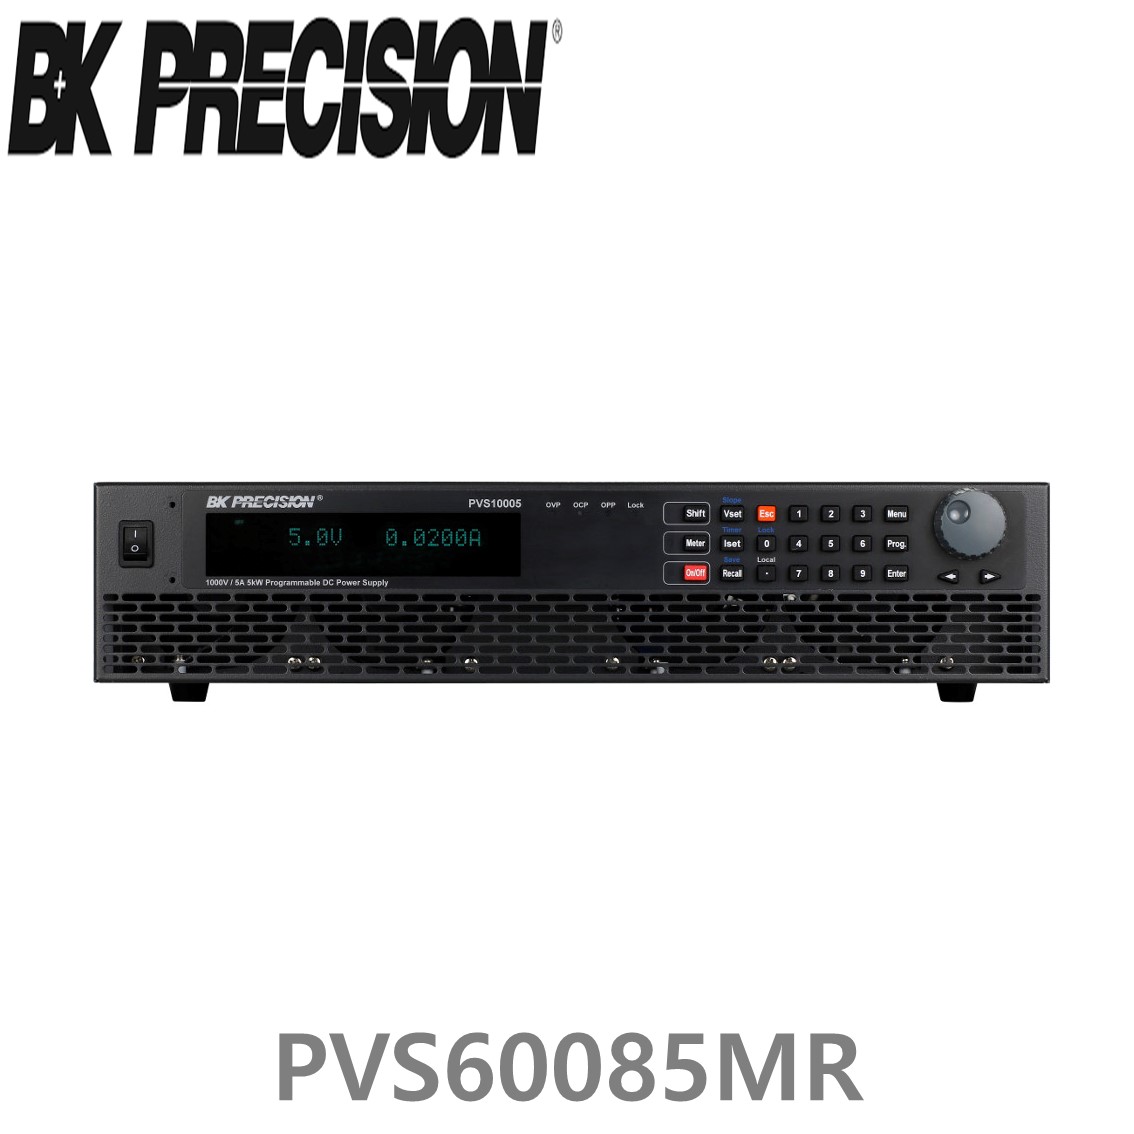 [ BK PRECISION ] BKPVS60085MR, 600V/8.5A(3000W), Programmable DC Power Supply, 프로그래머블 DC 전원공급기, B&KPVS60085MR